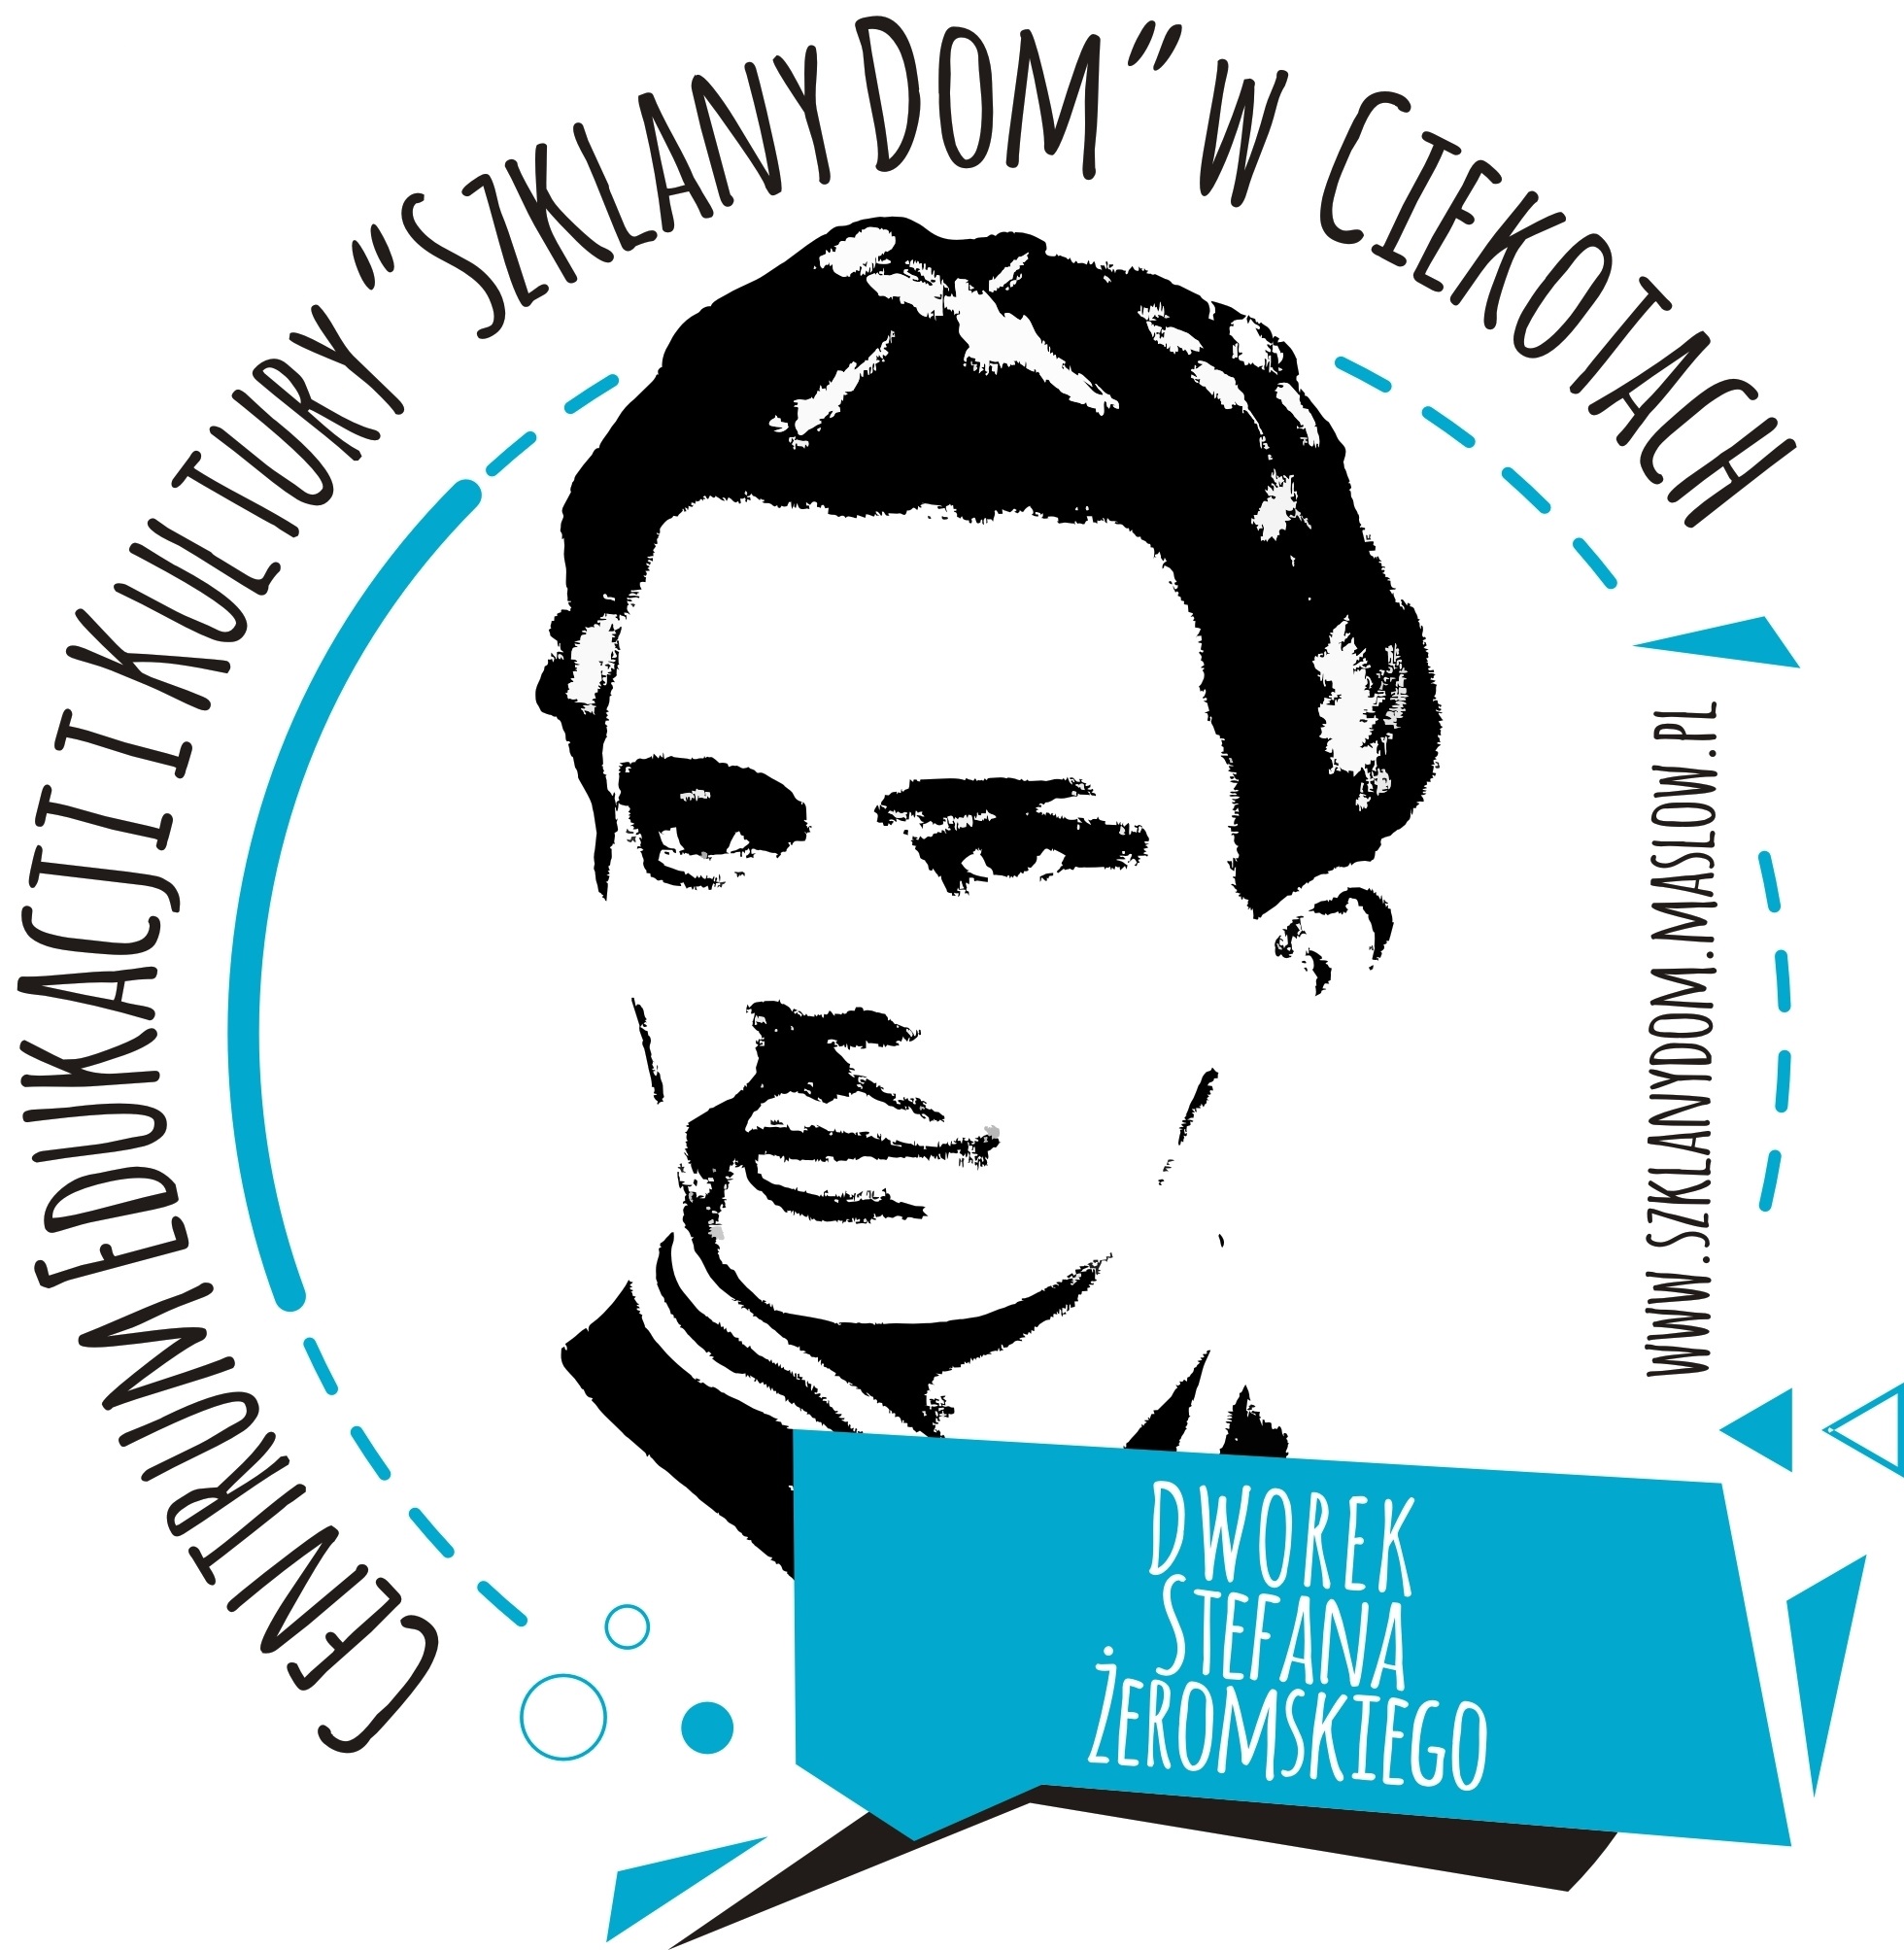 logo szklany dom_CMYK